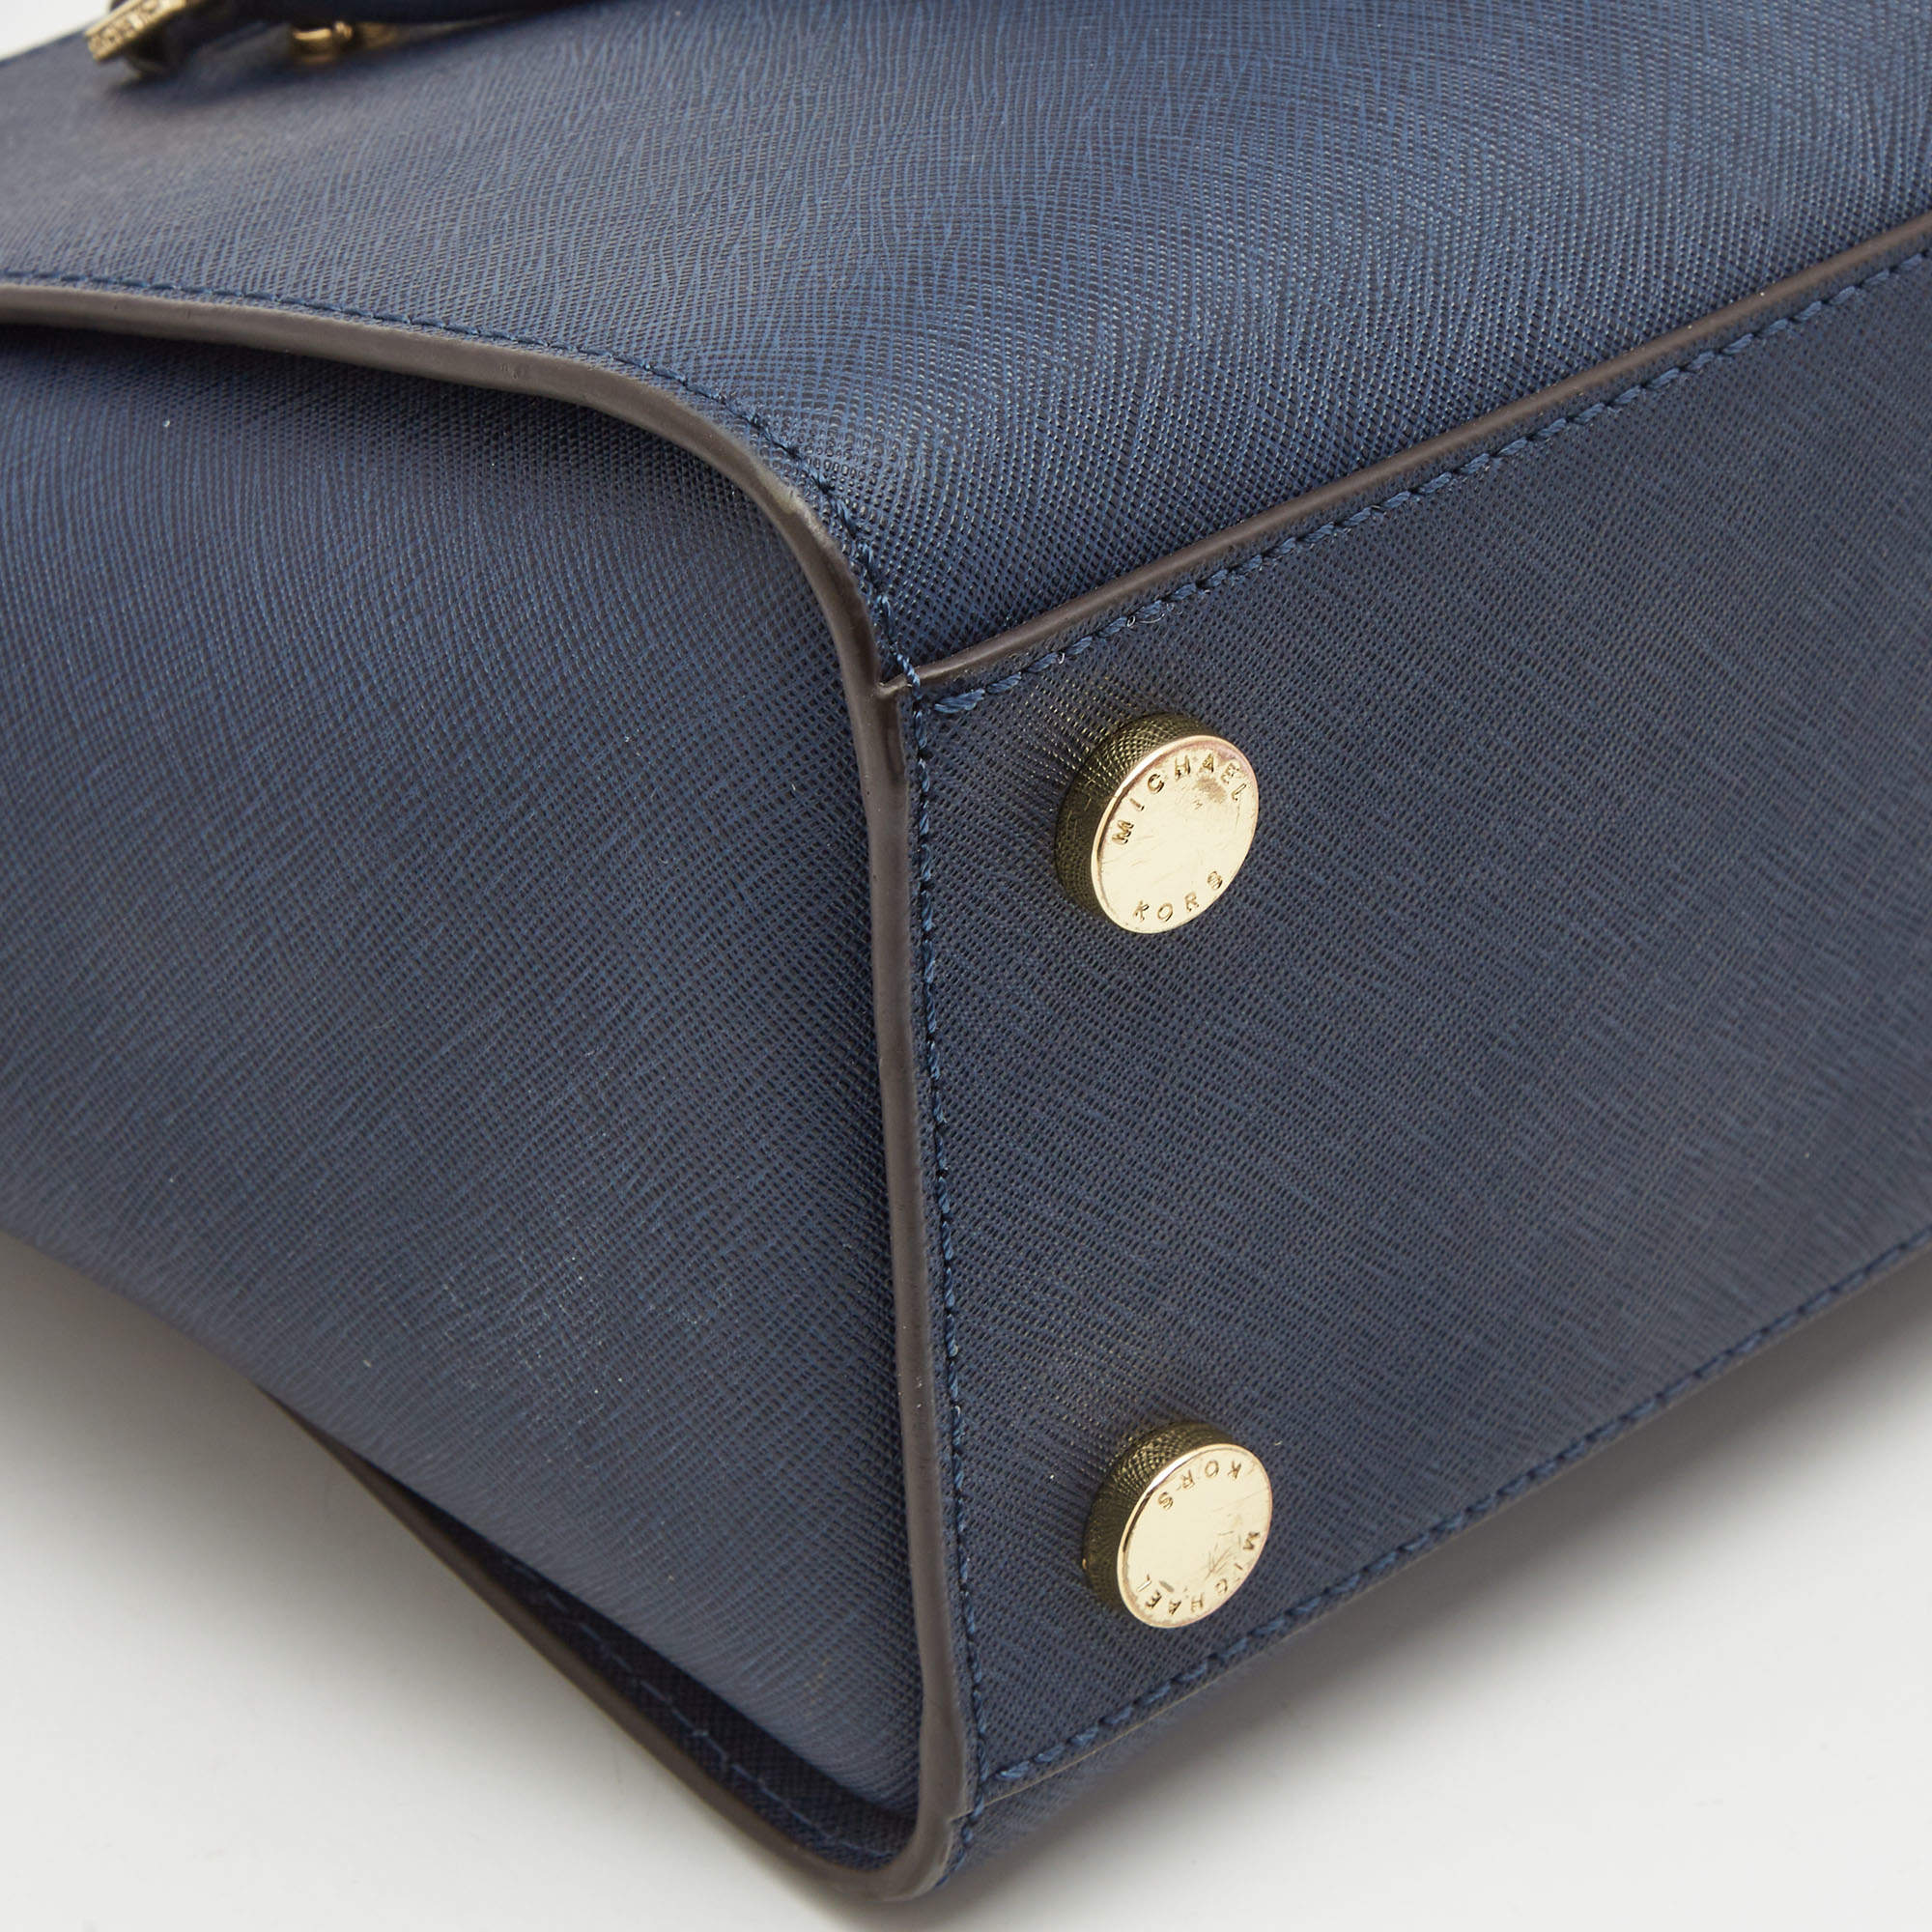 Michael Kors Karlie Medium Leather Satchel Bag - Pale Blue 30F1GCDS2L-487  194900927892 - Handbags - Jomashop